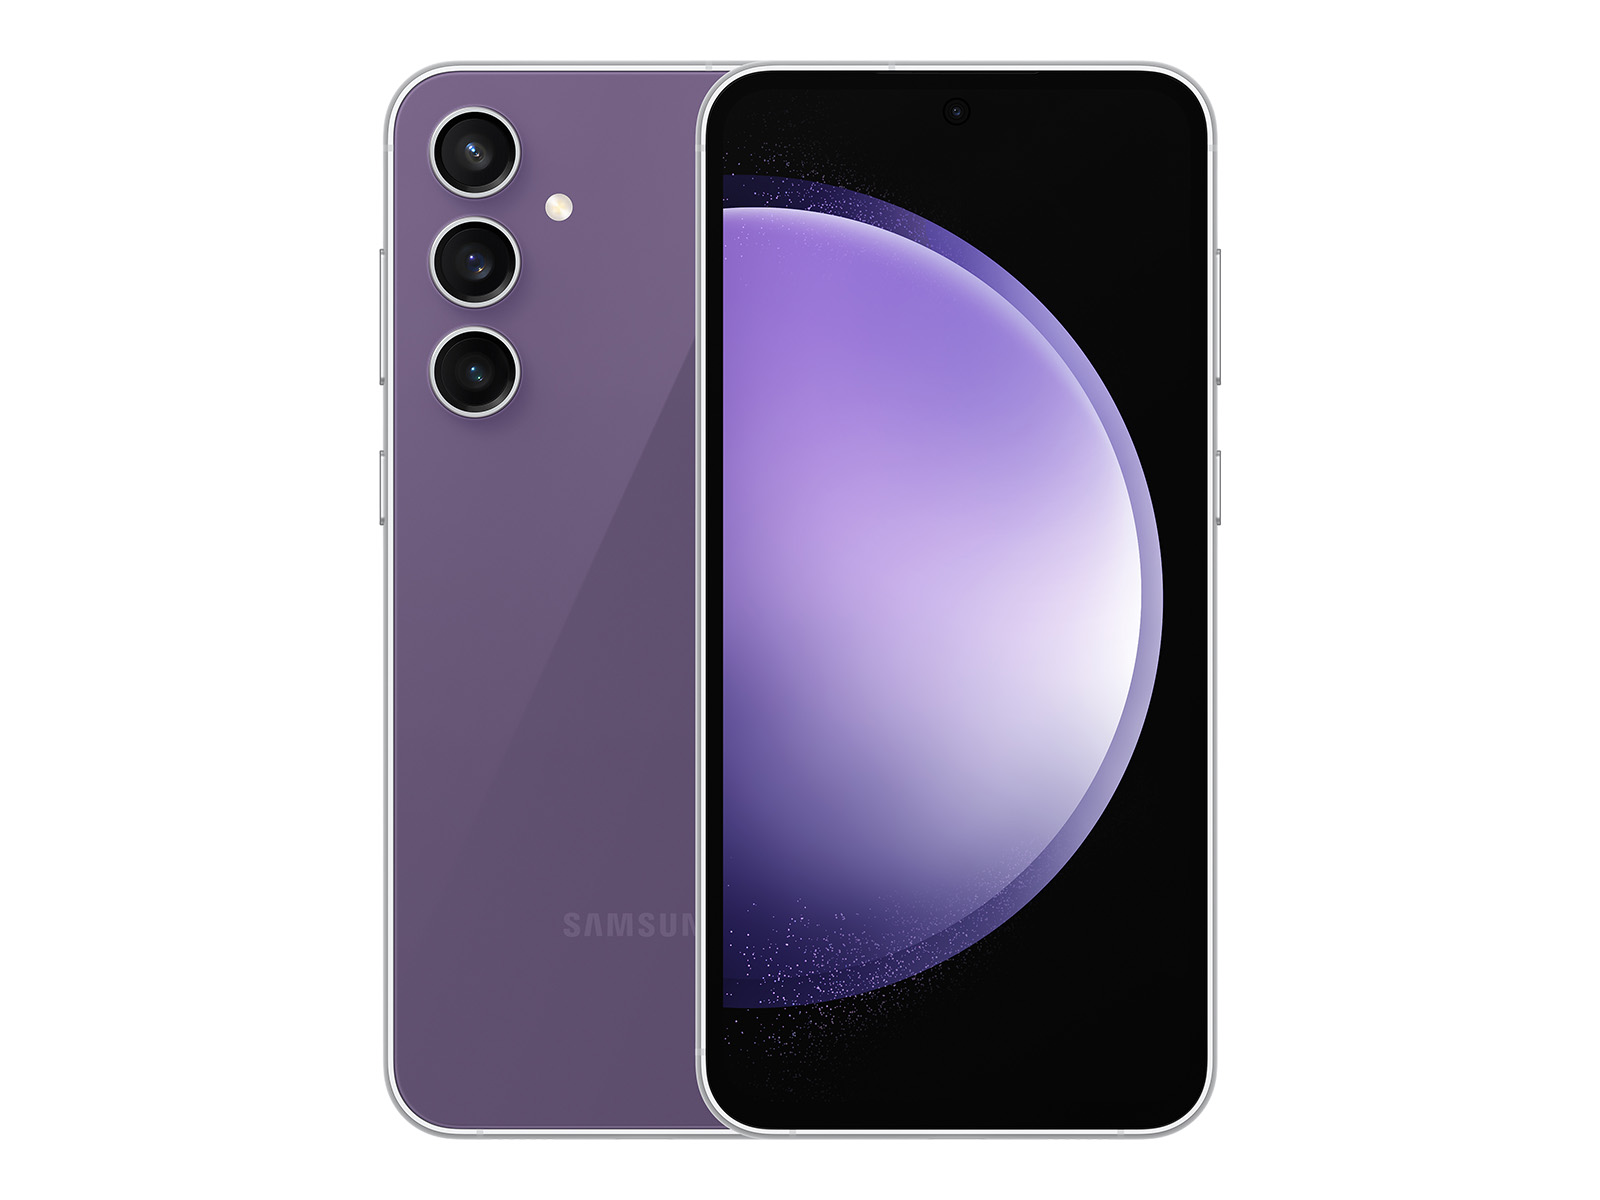 Samsung Galaxy Note9 128 GB (Unlocked) : Lavender Purple | Samsung US